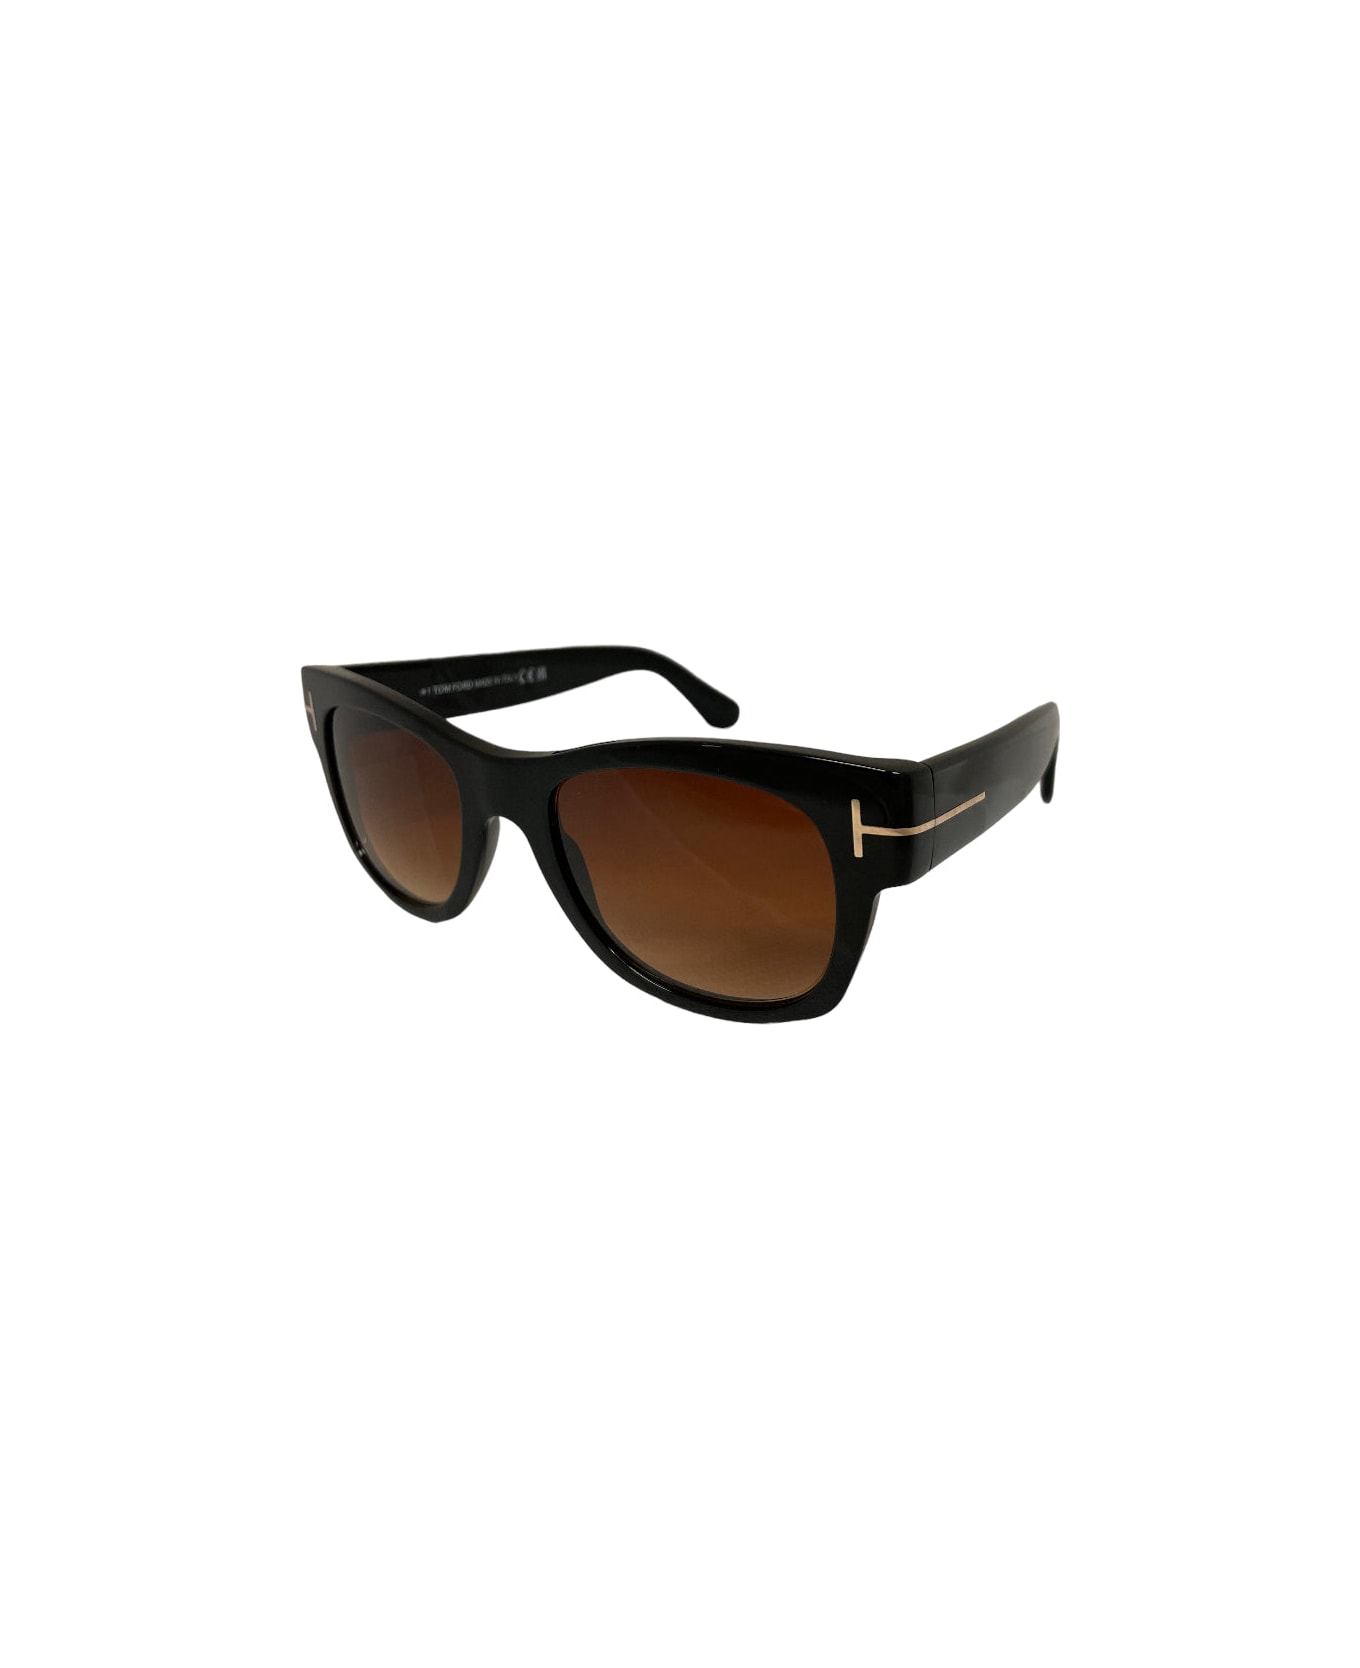 Tom Ford Eyewear Tf 5040/s - Black Sunglasses